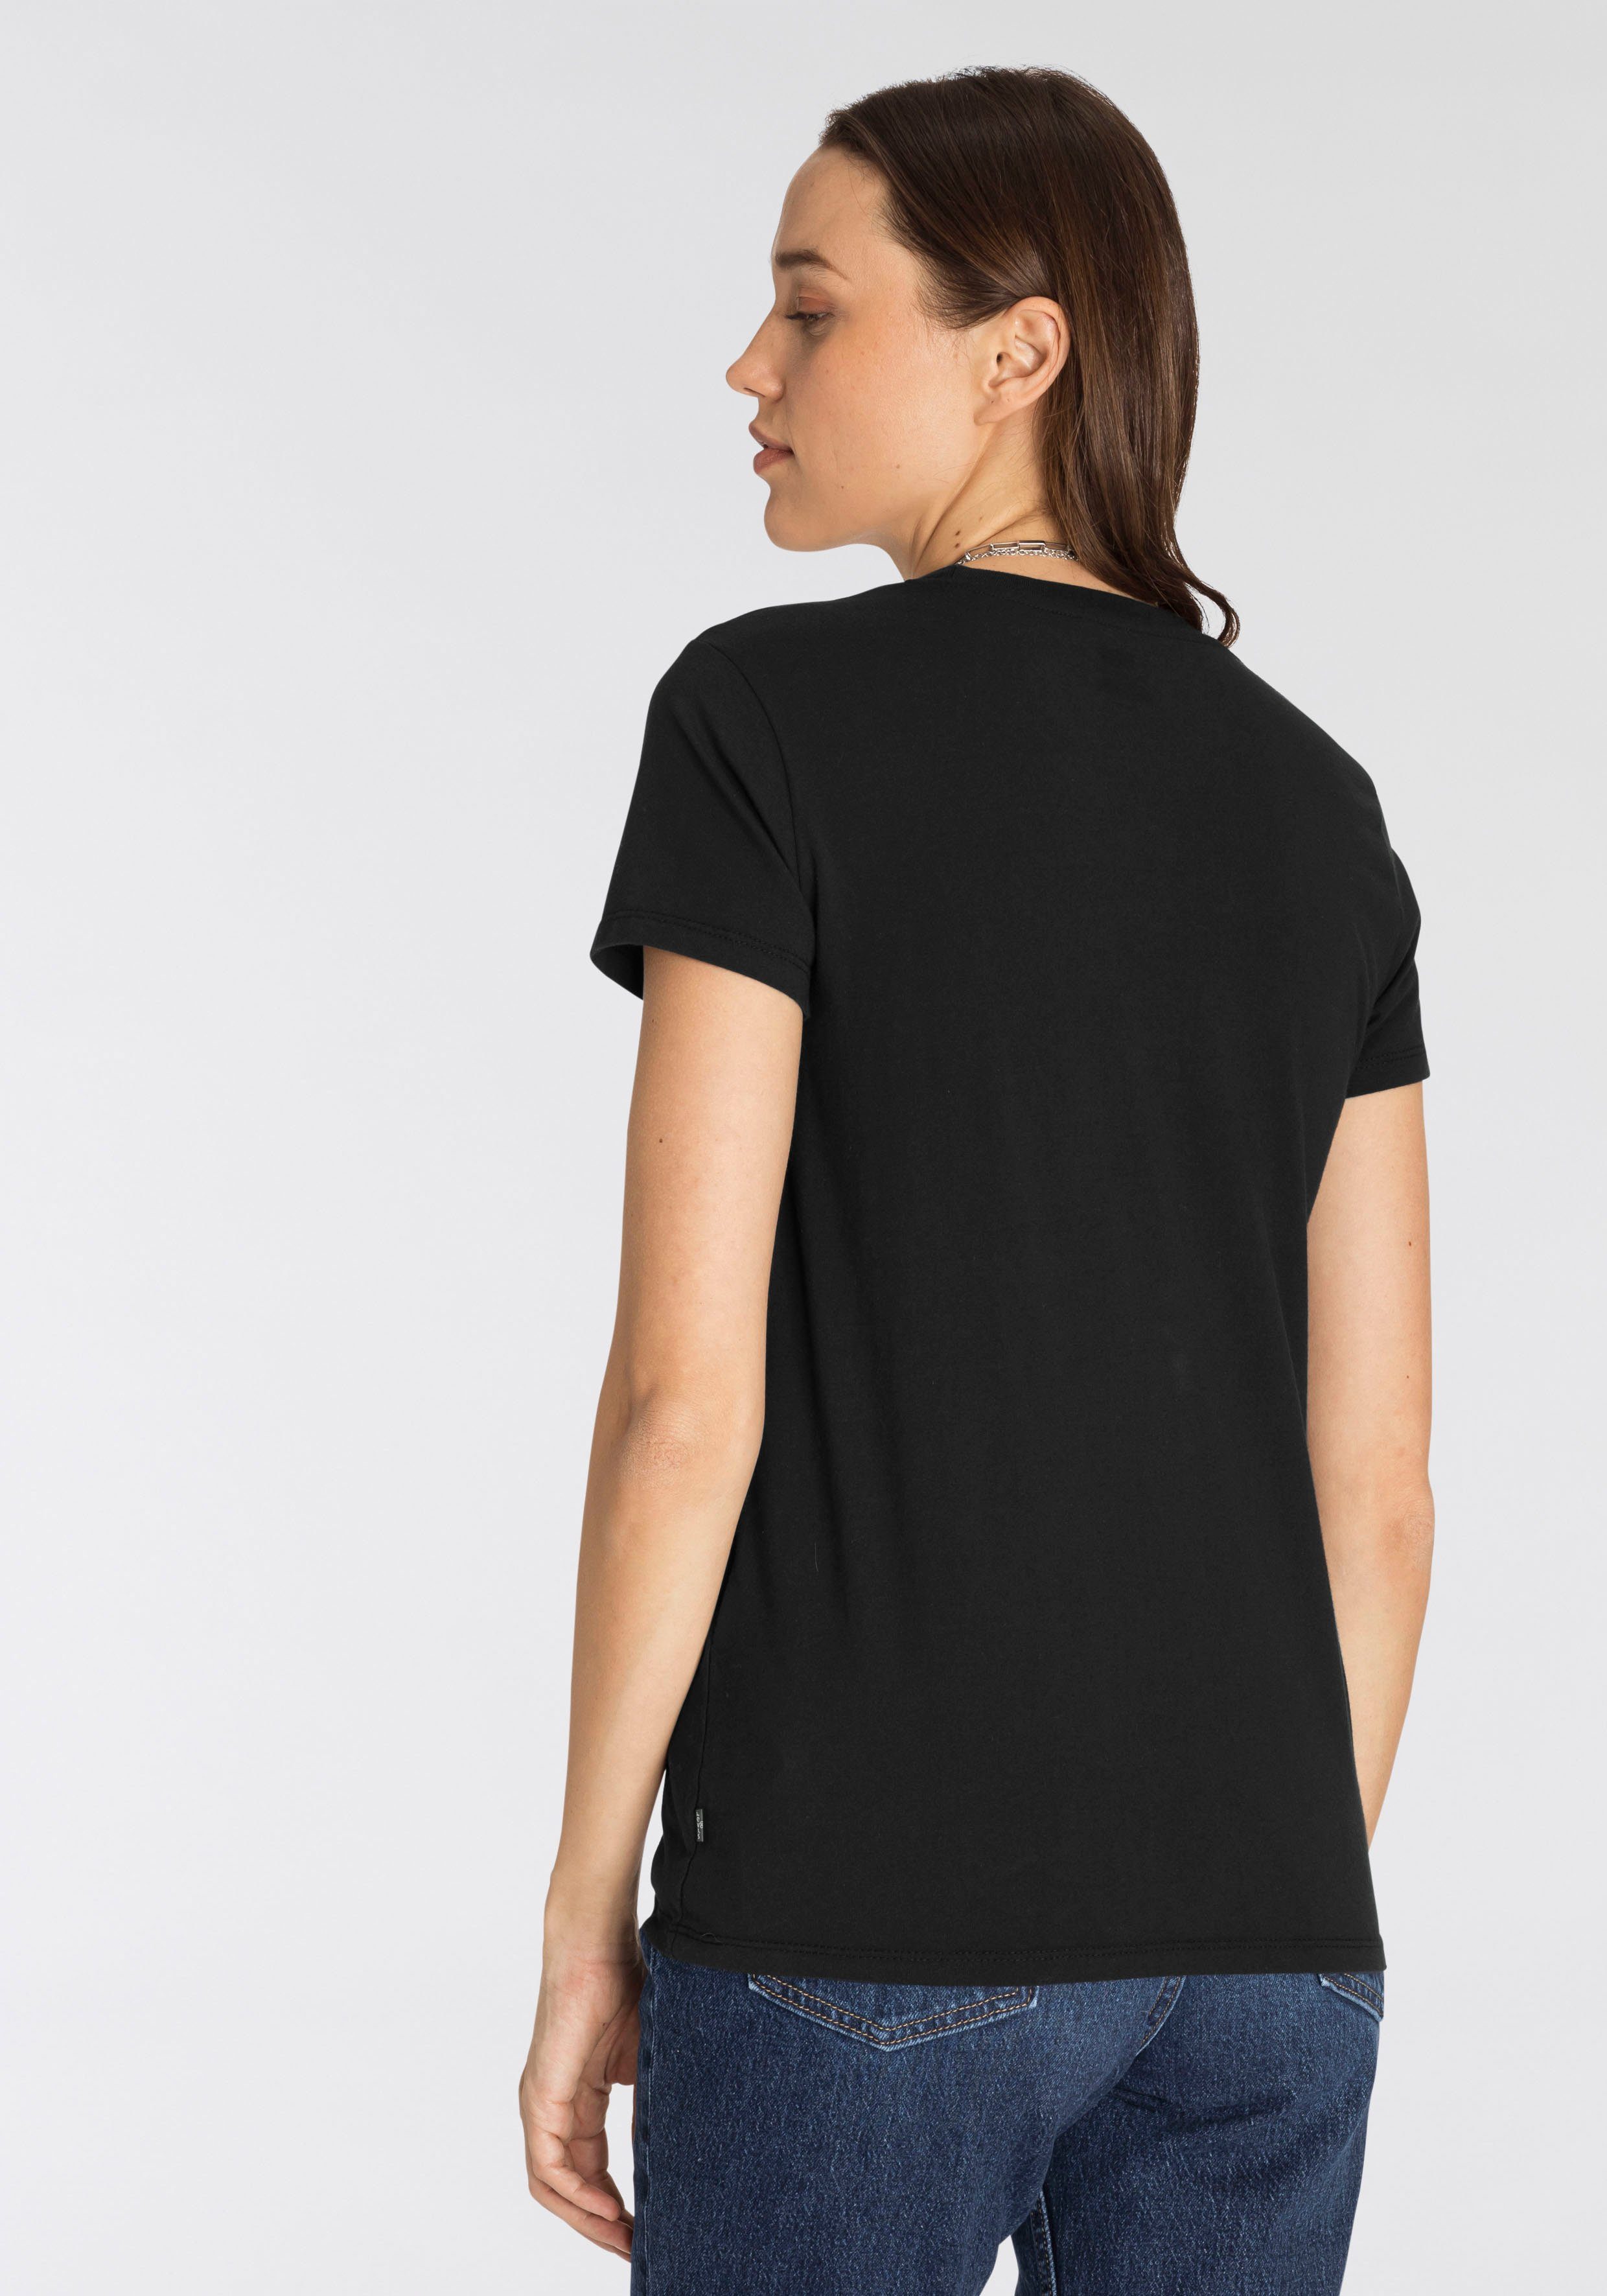 Levi's® T-Shirt THE PERFECT Markenschriftzug schwarz TEE Mit